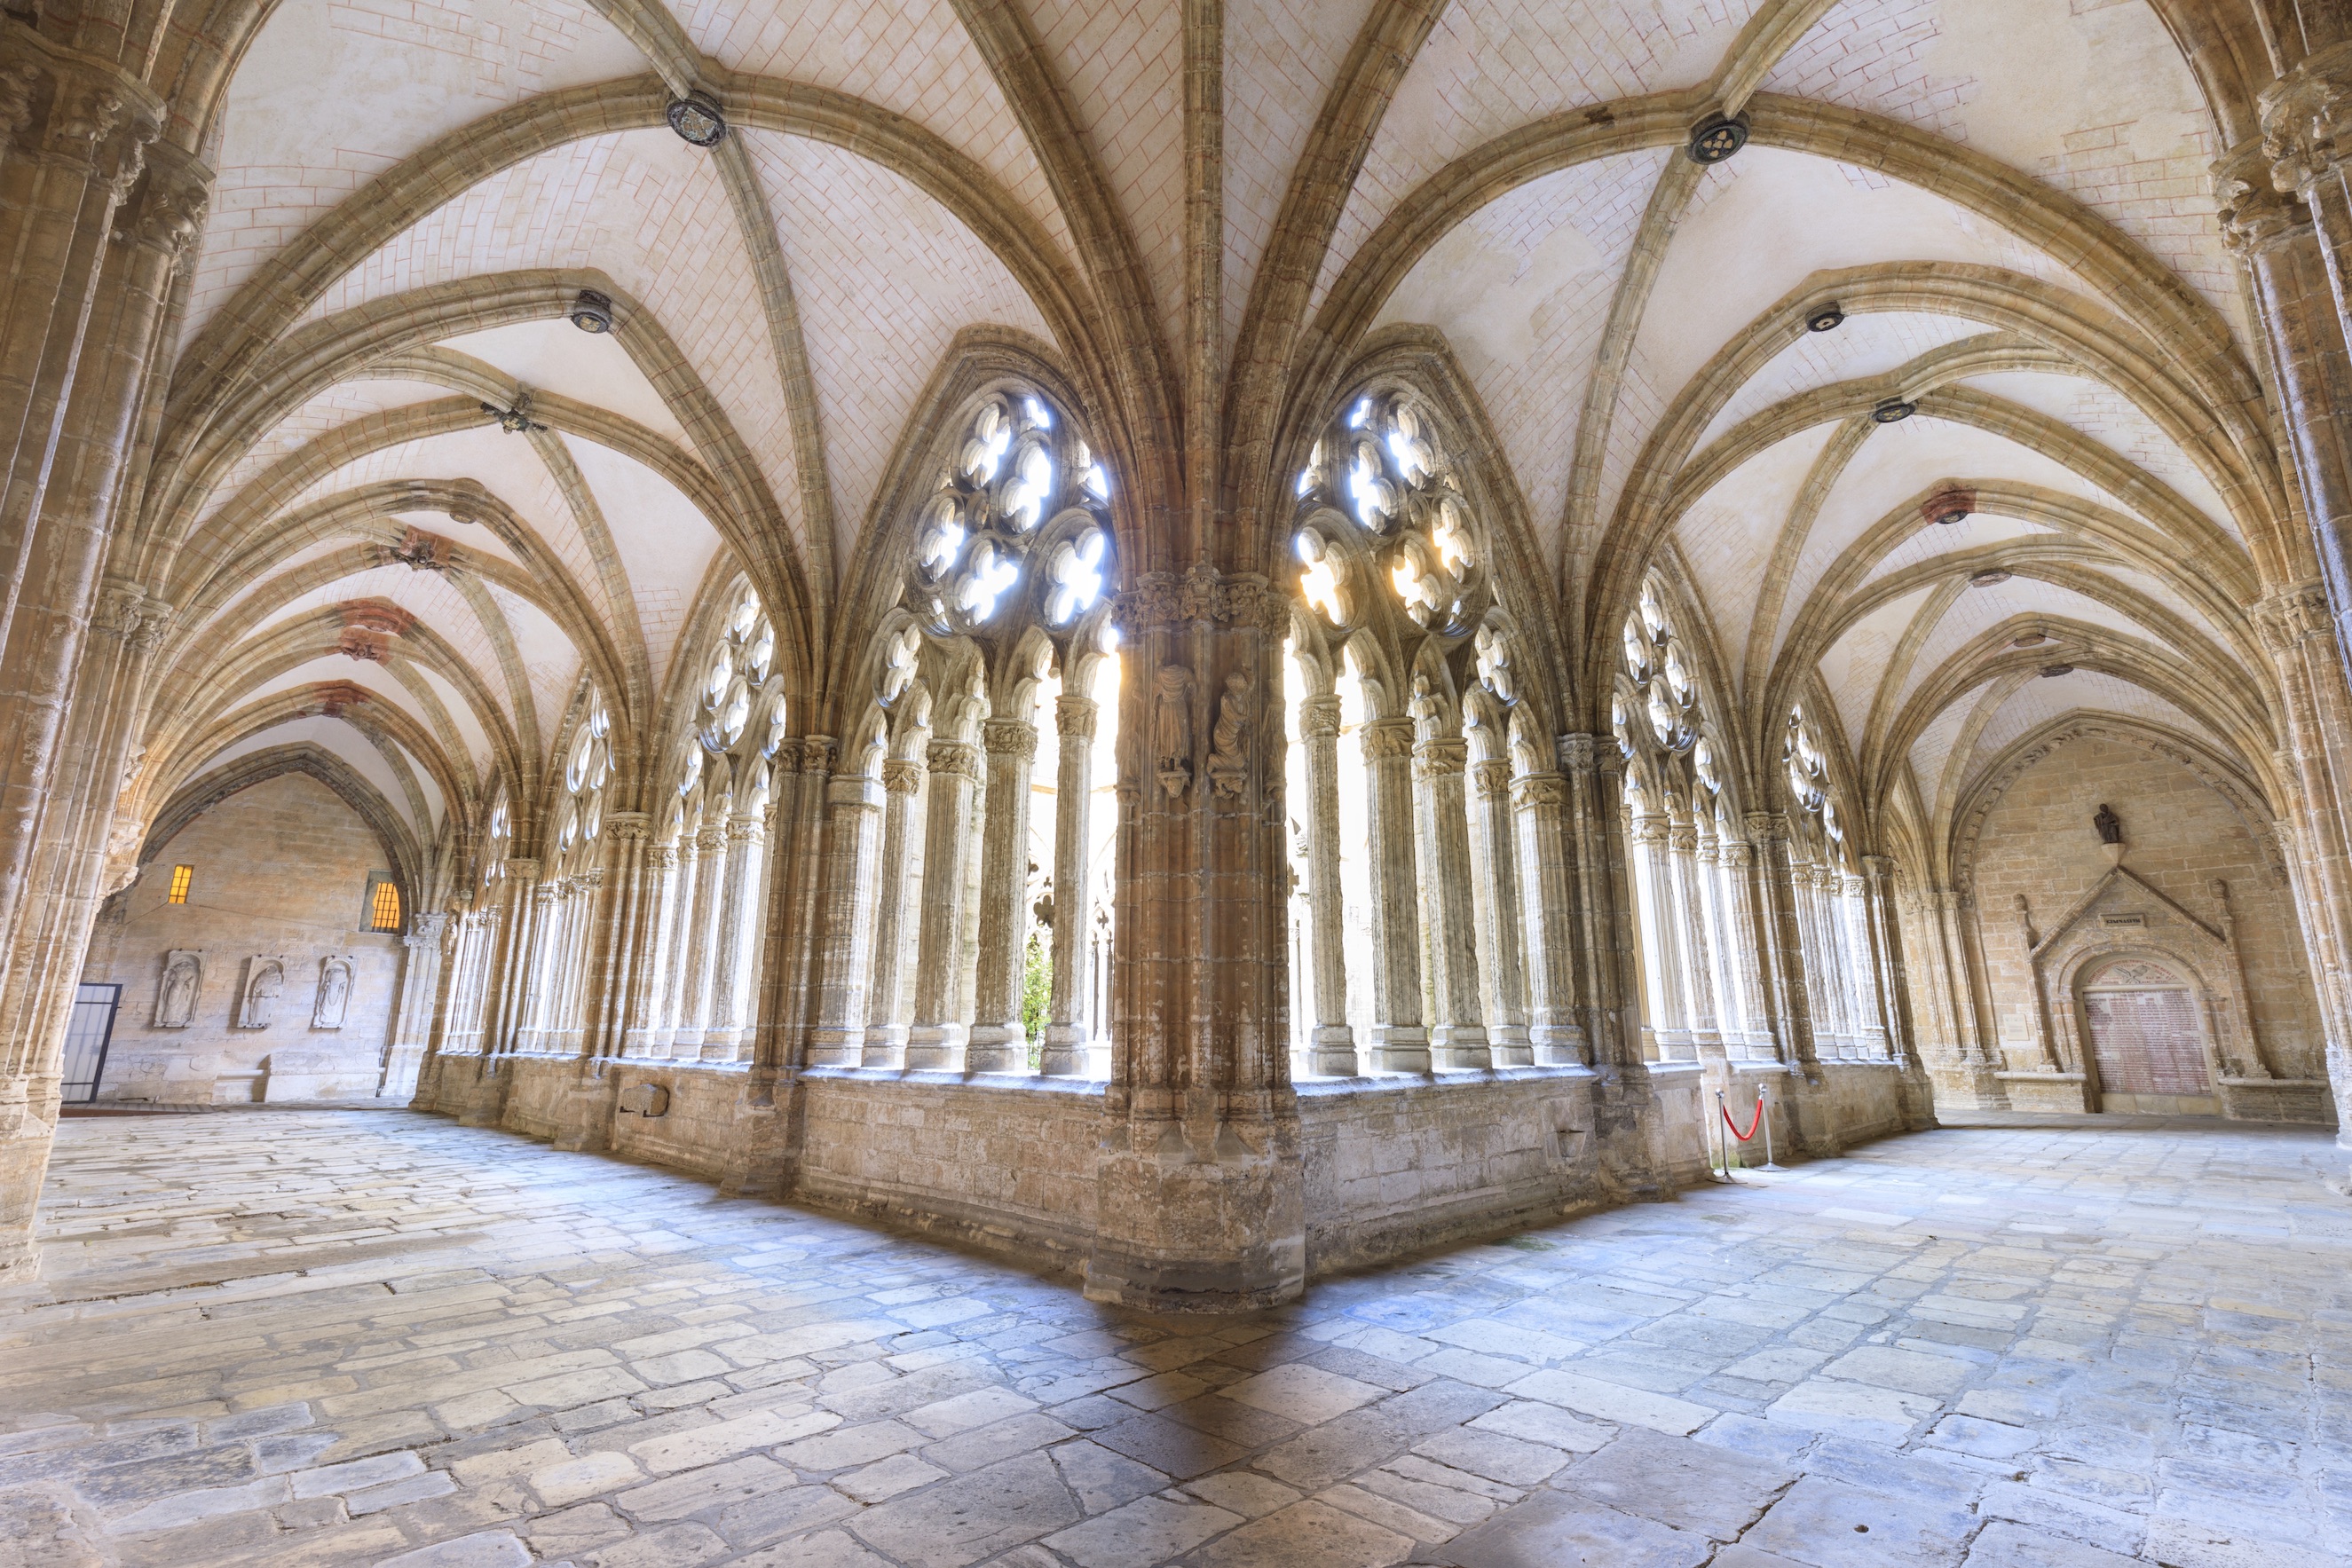 https://bubo.sk/uploads/galleries/21367/claustro-catedral-oviedo.jpg